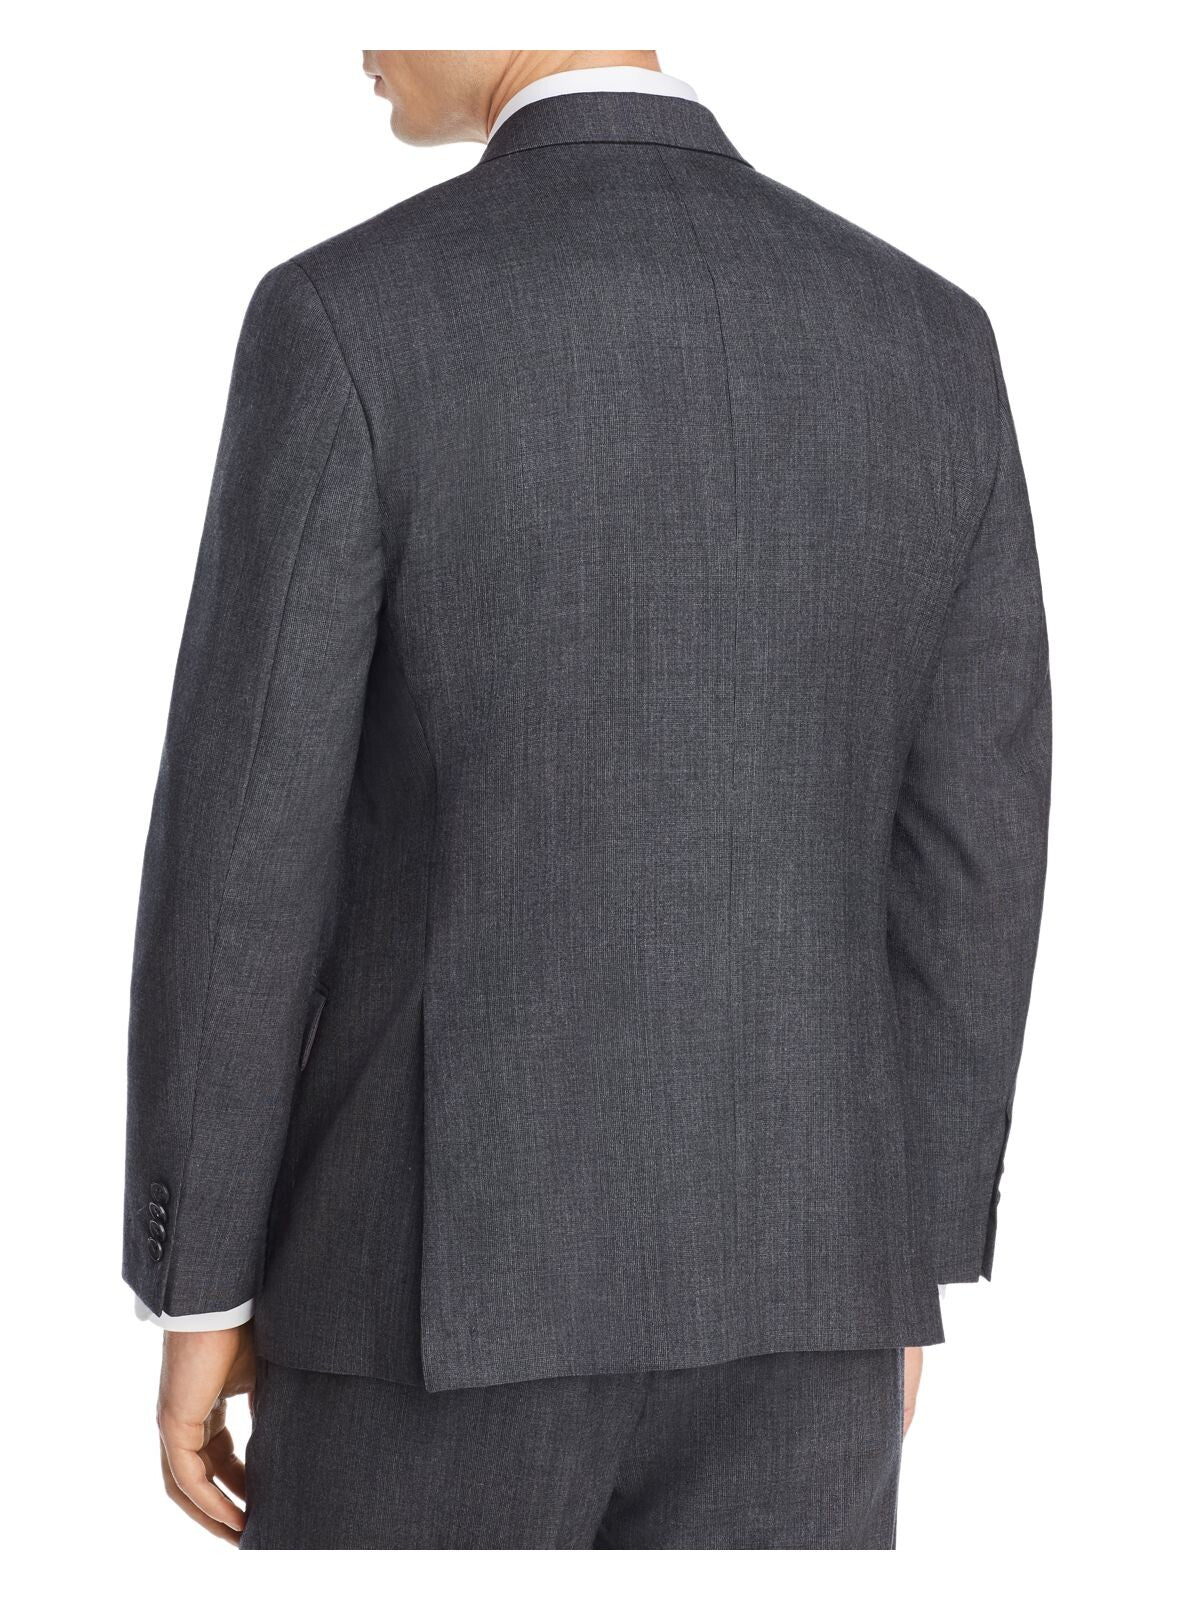 MICHAEL KORS Mens Gray Single Breasted, Blazer Jacket 42 SHORT